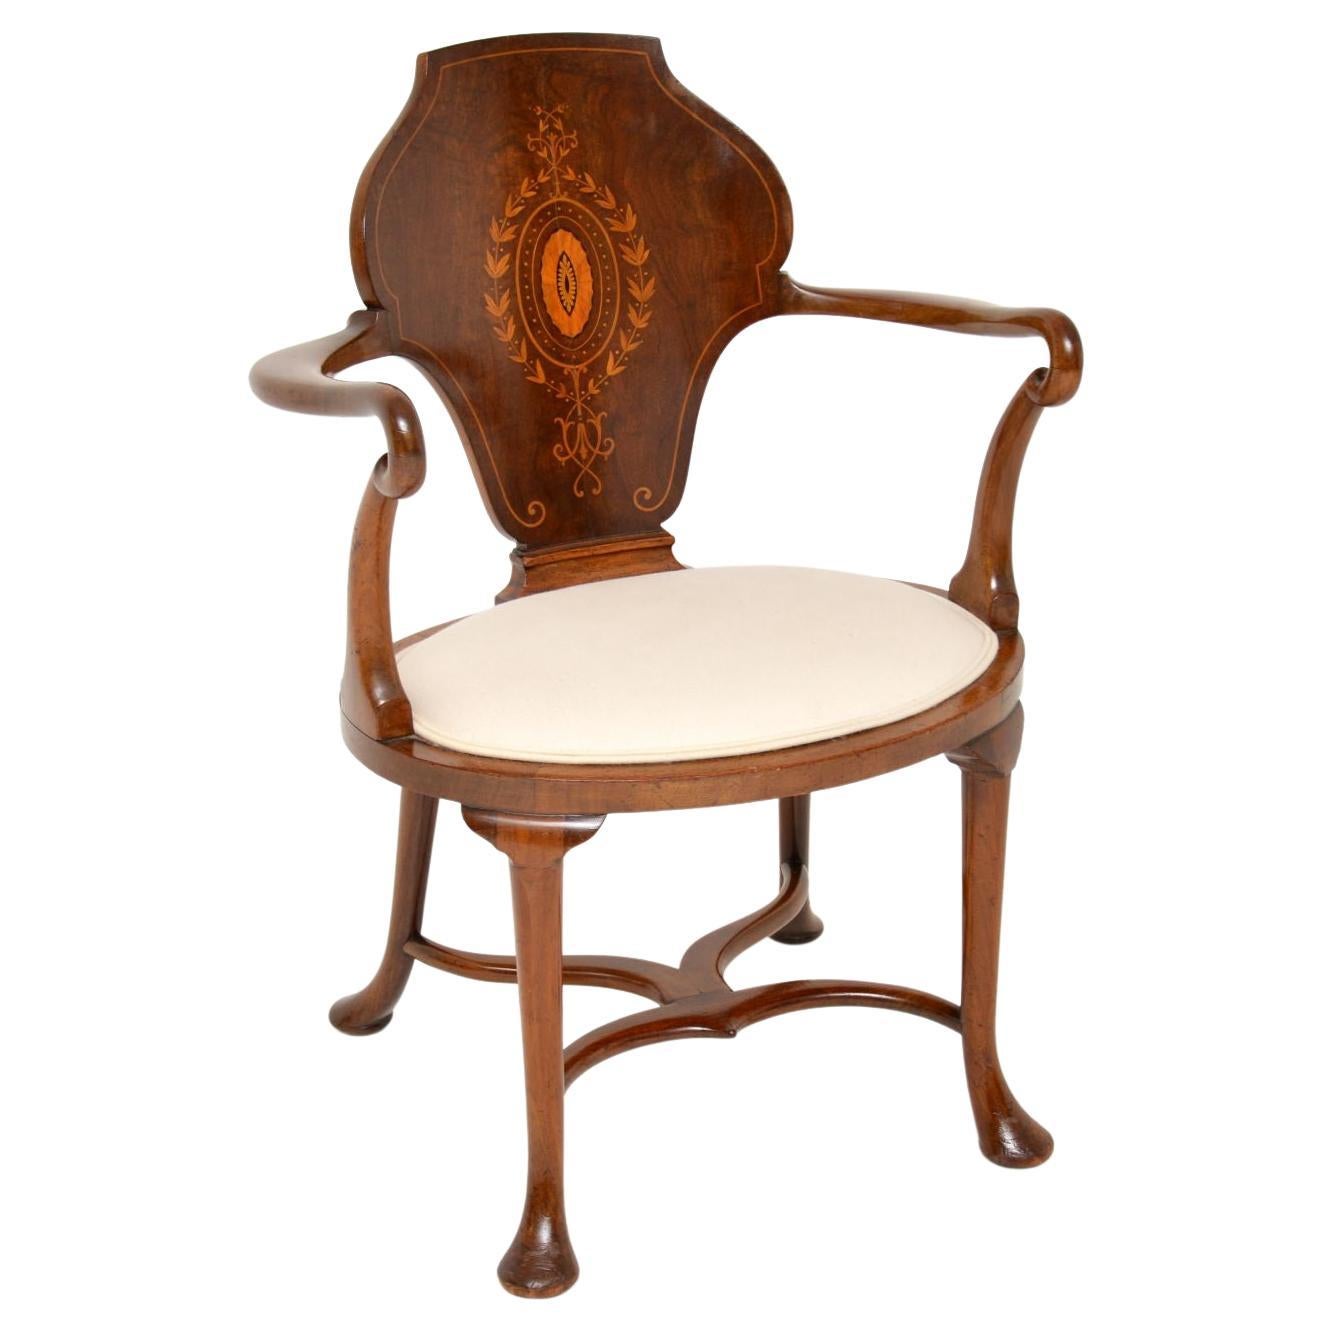 Antique Edwardian Inlaid Armchair